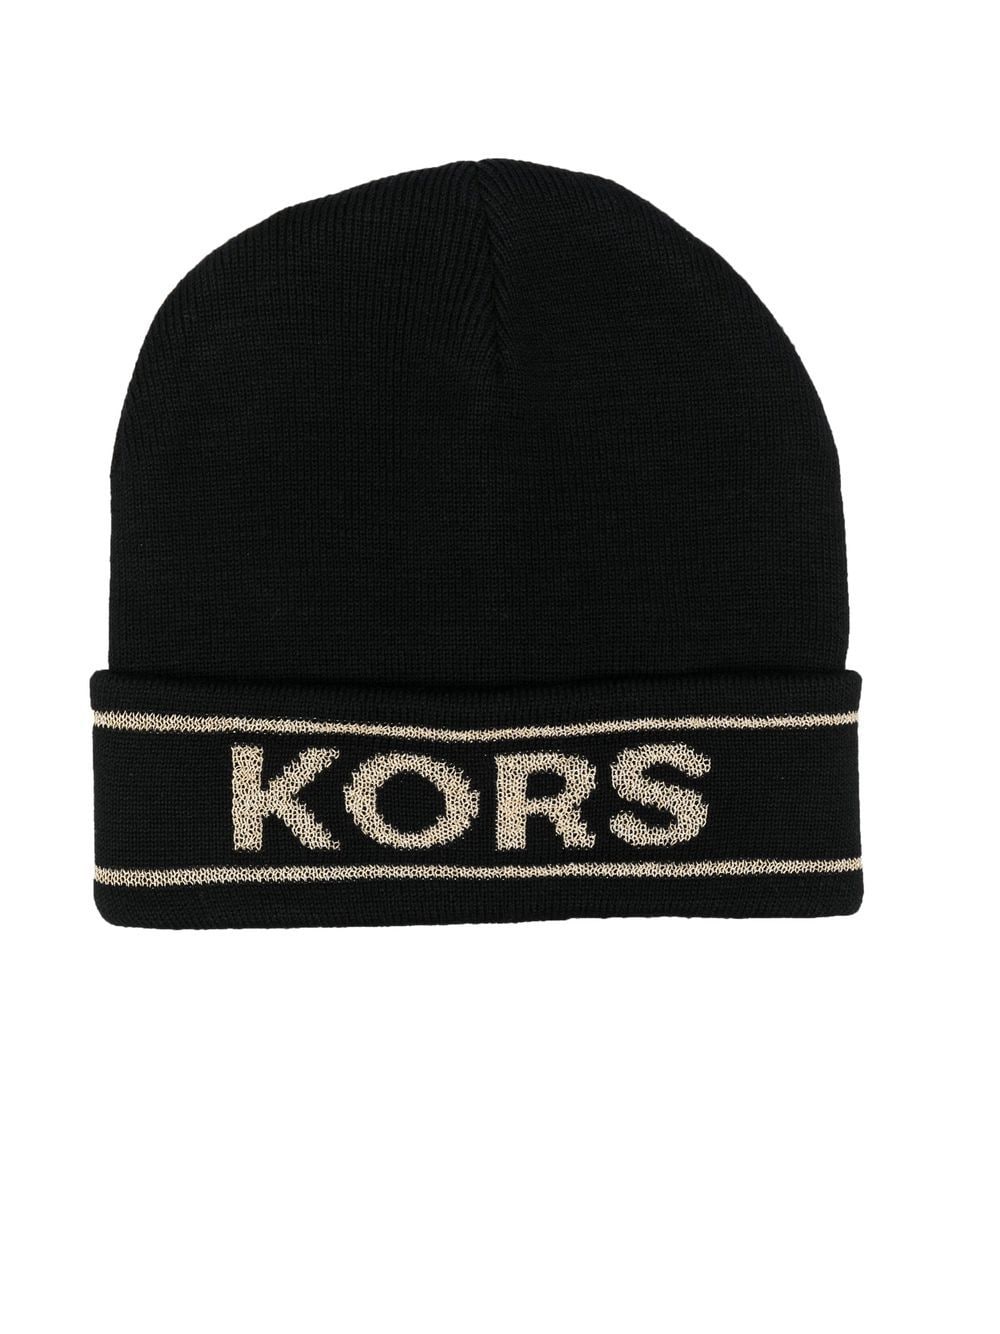 Michael Kors Kids intarsia-knit logo beanie - Black von Michael Kors Kids